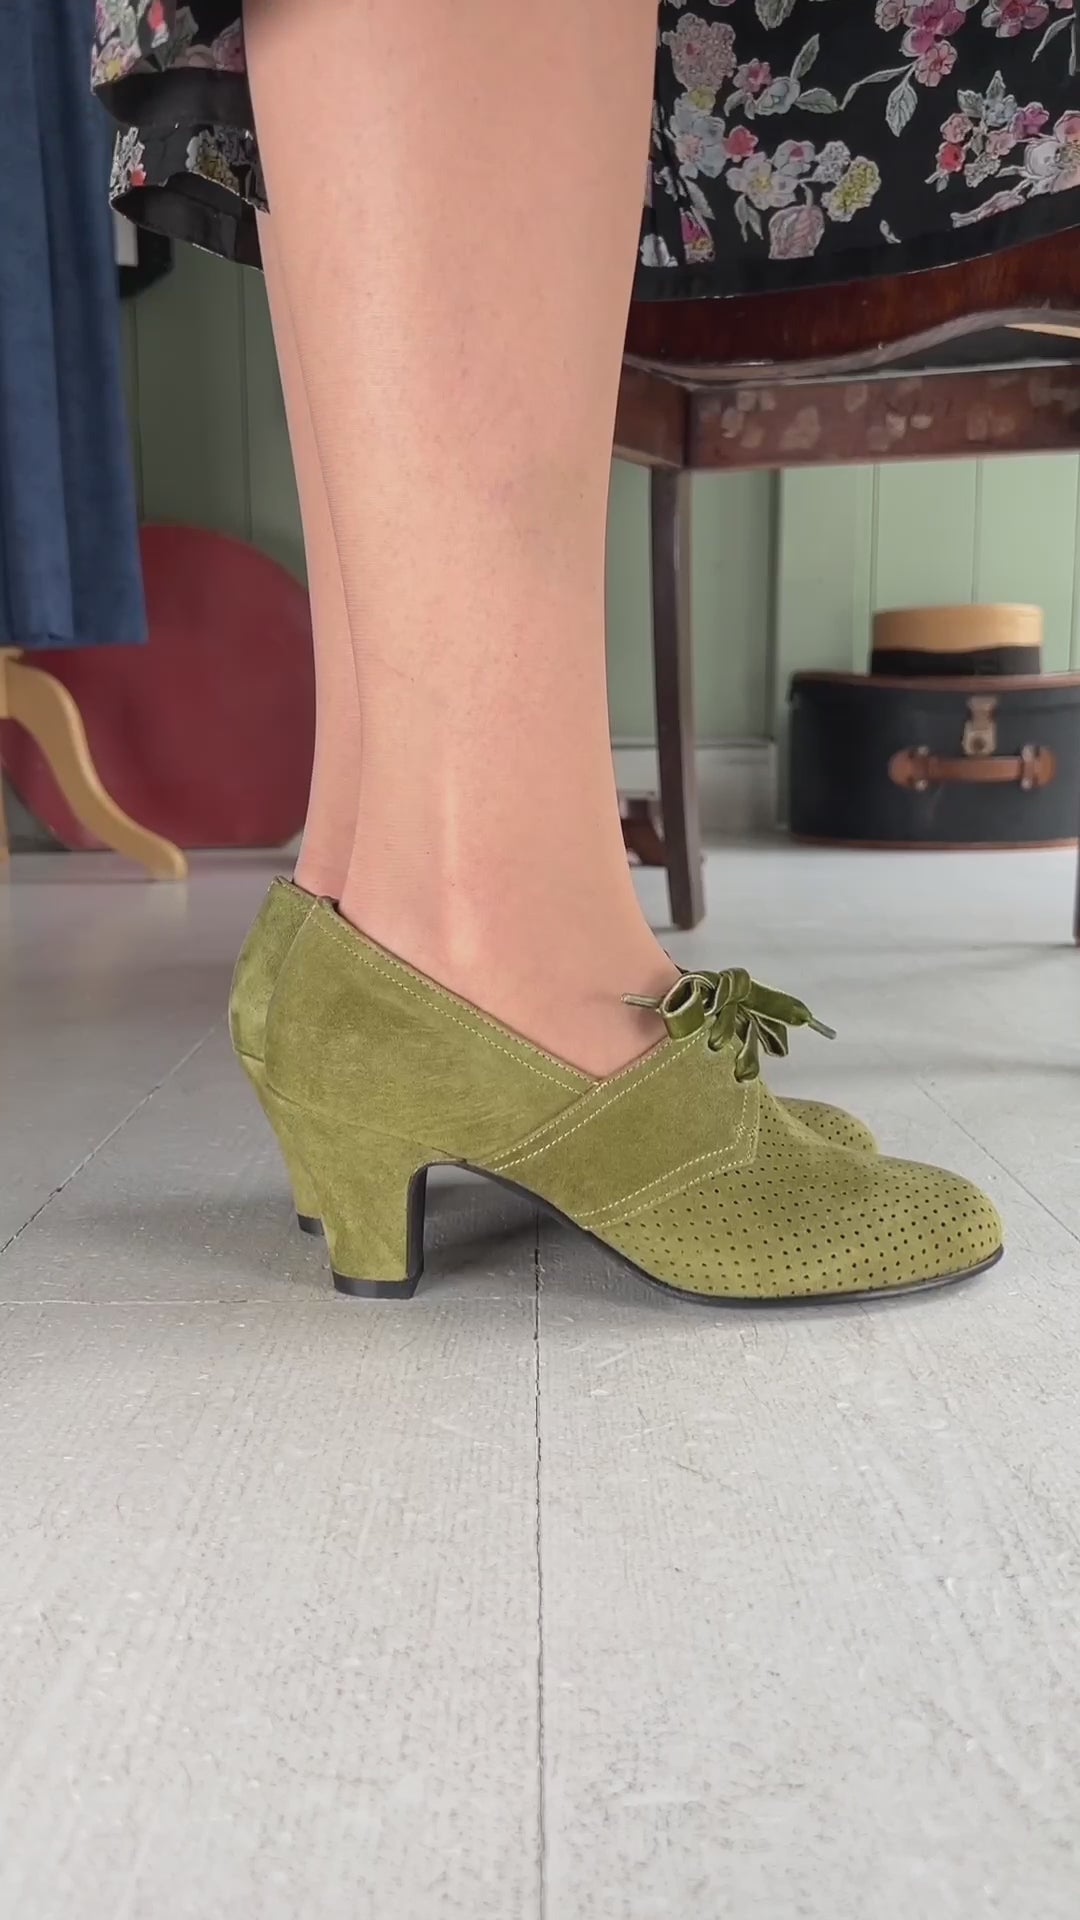 VEGAN shoes - 40s vintage style pumps with shoe lace - Green - Esther